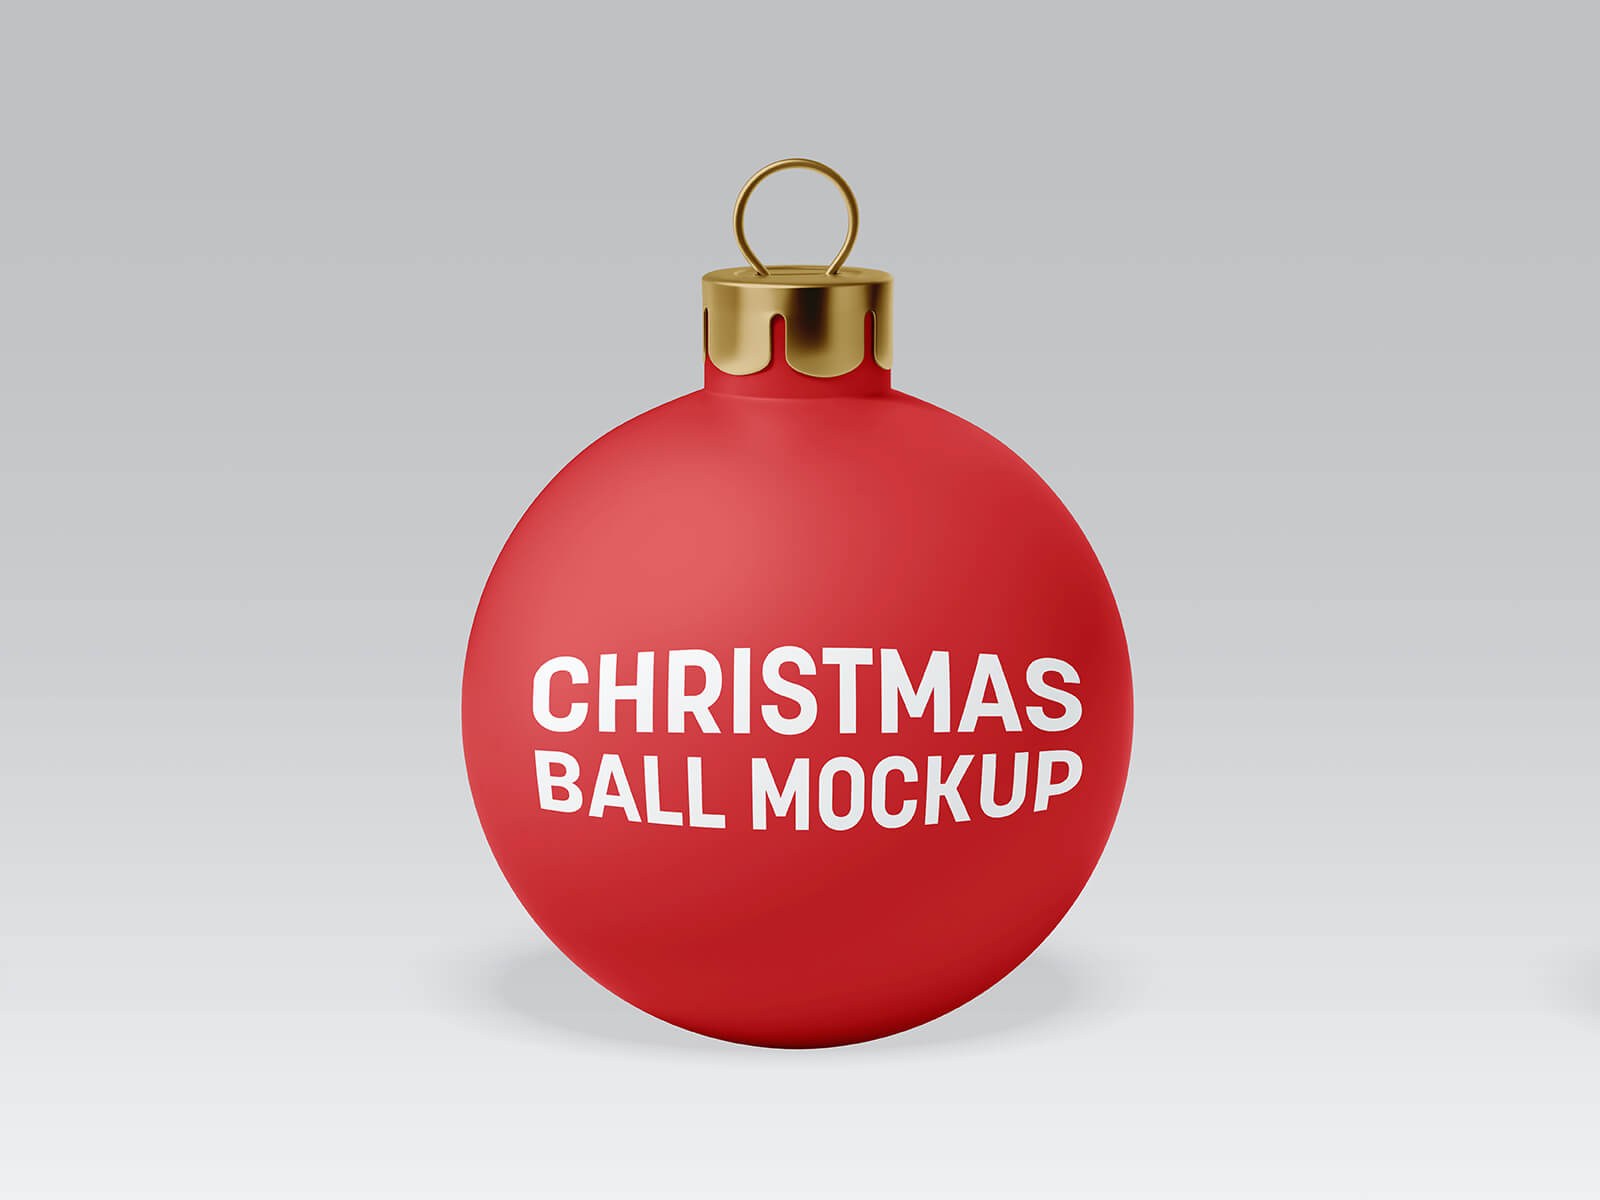 Free Christmas Balls / Baubles Mockup PSD